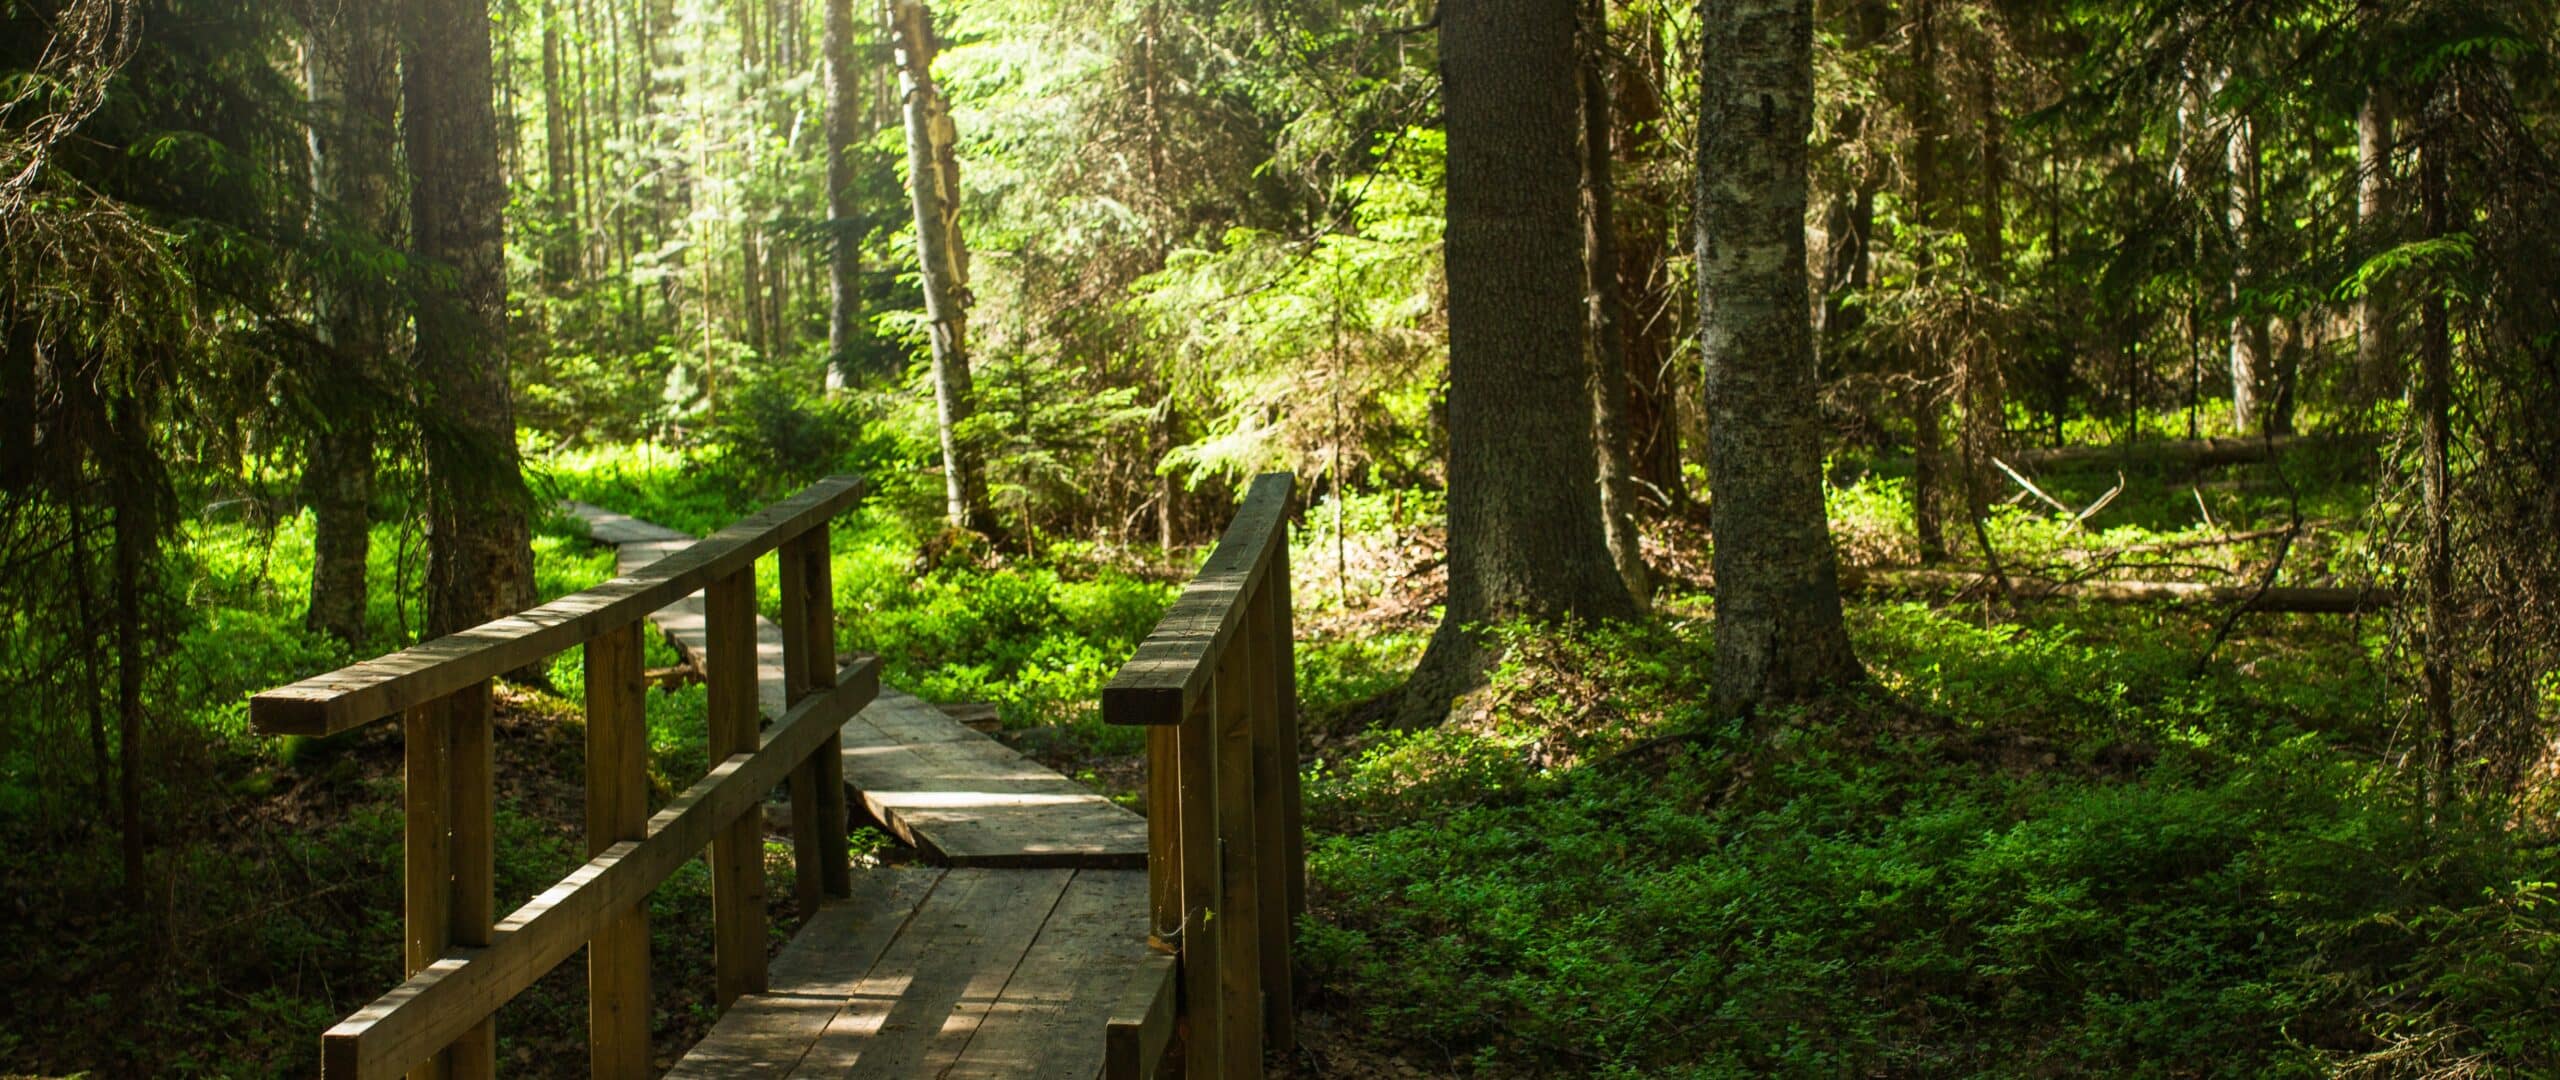 Liesjärvi National Park forest trail